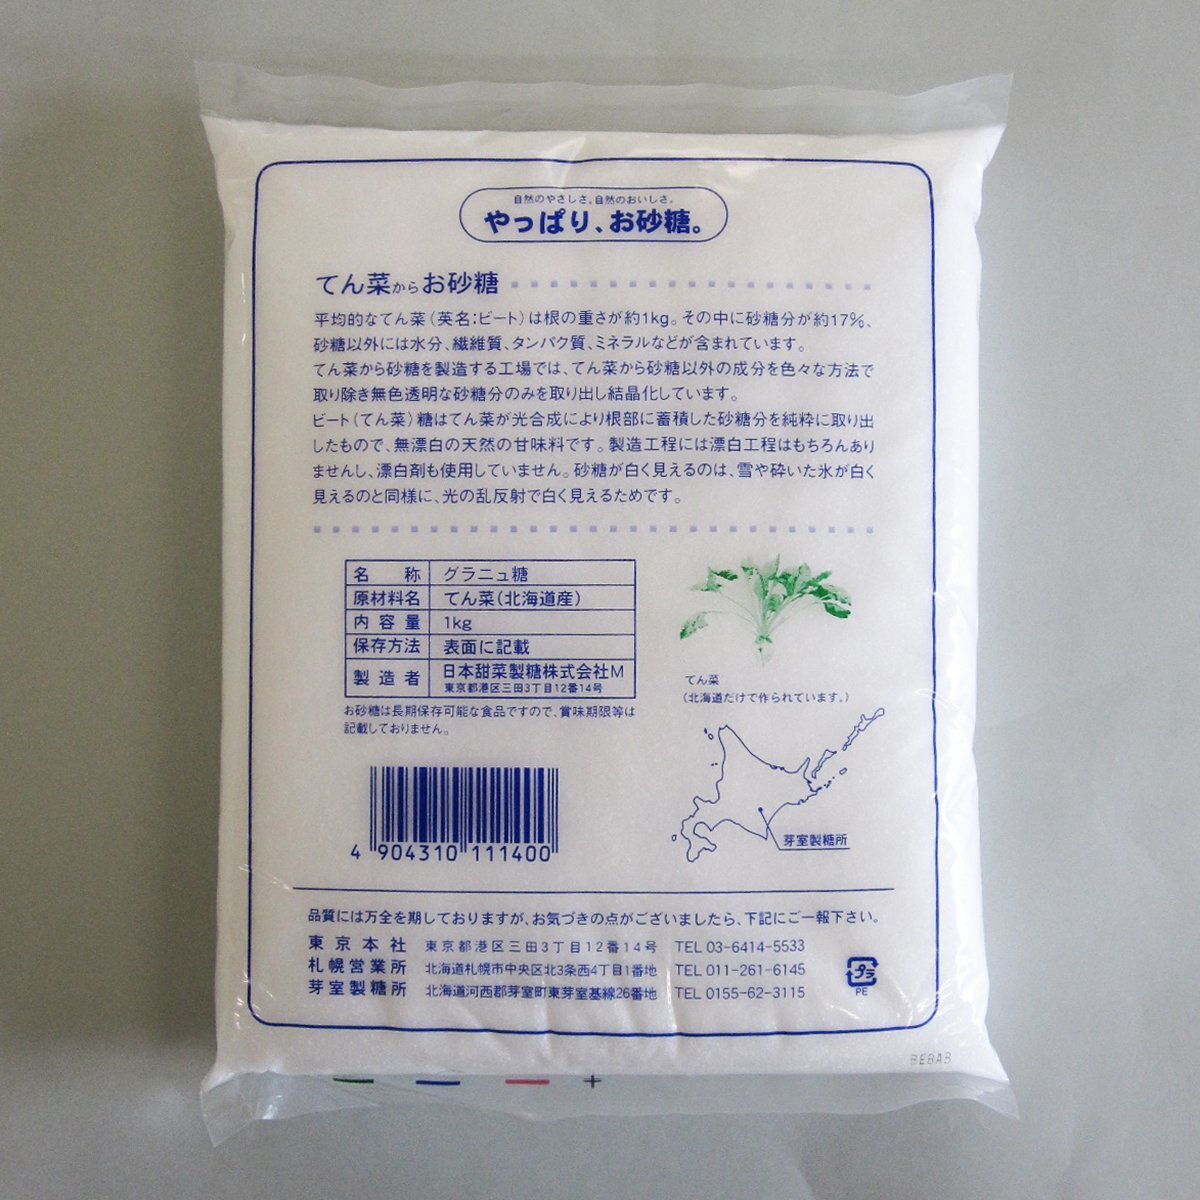  lily of the valley seal glanyu sugar (... sugar ) 1kg Hokkaido production beet 100%